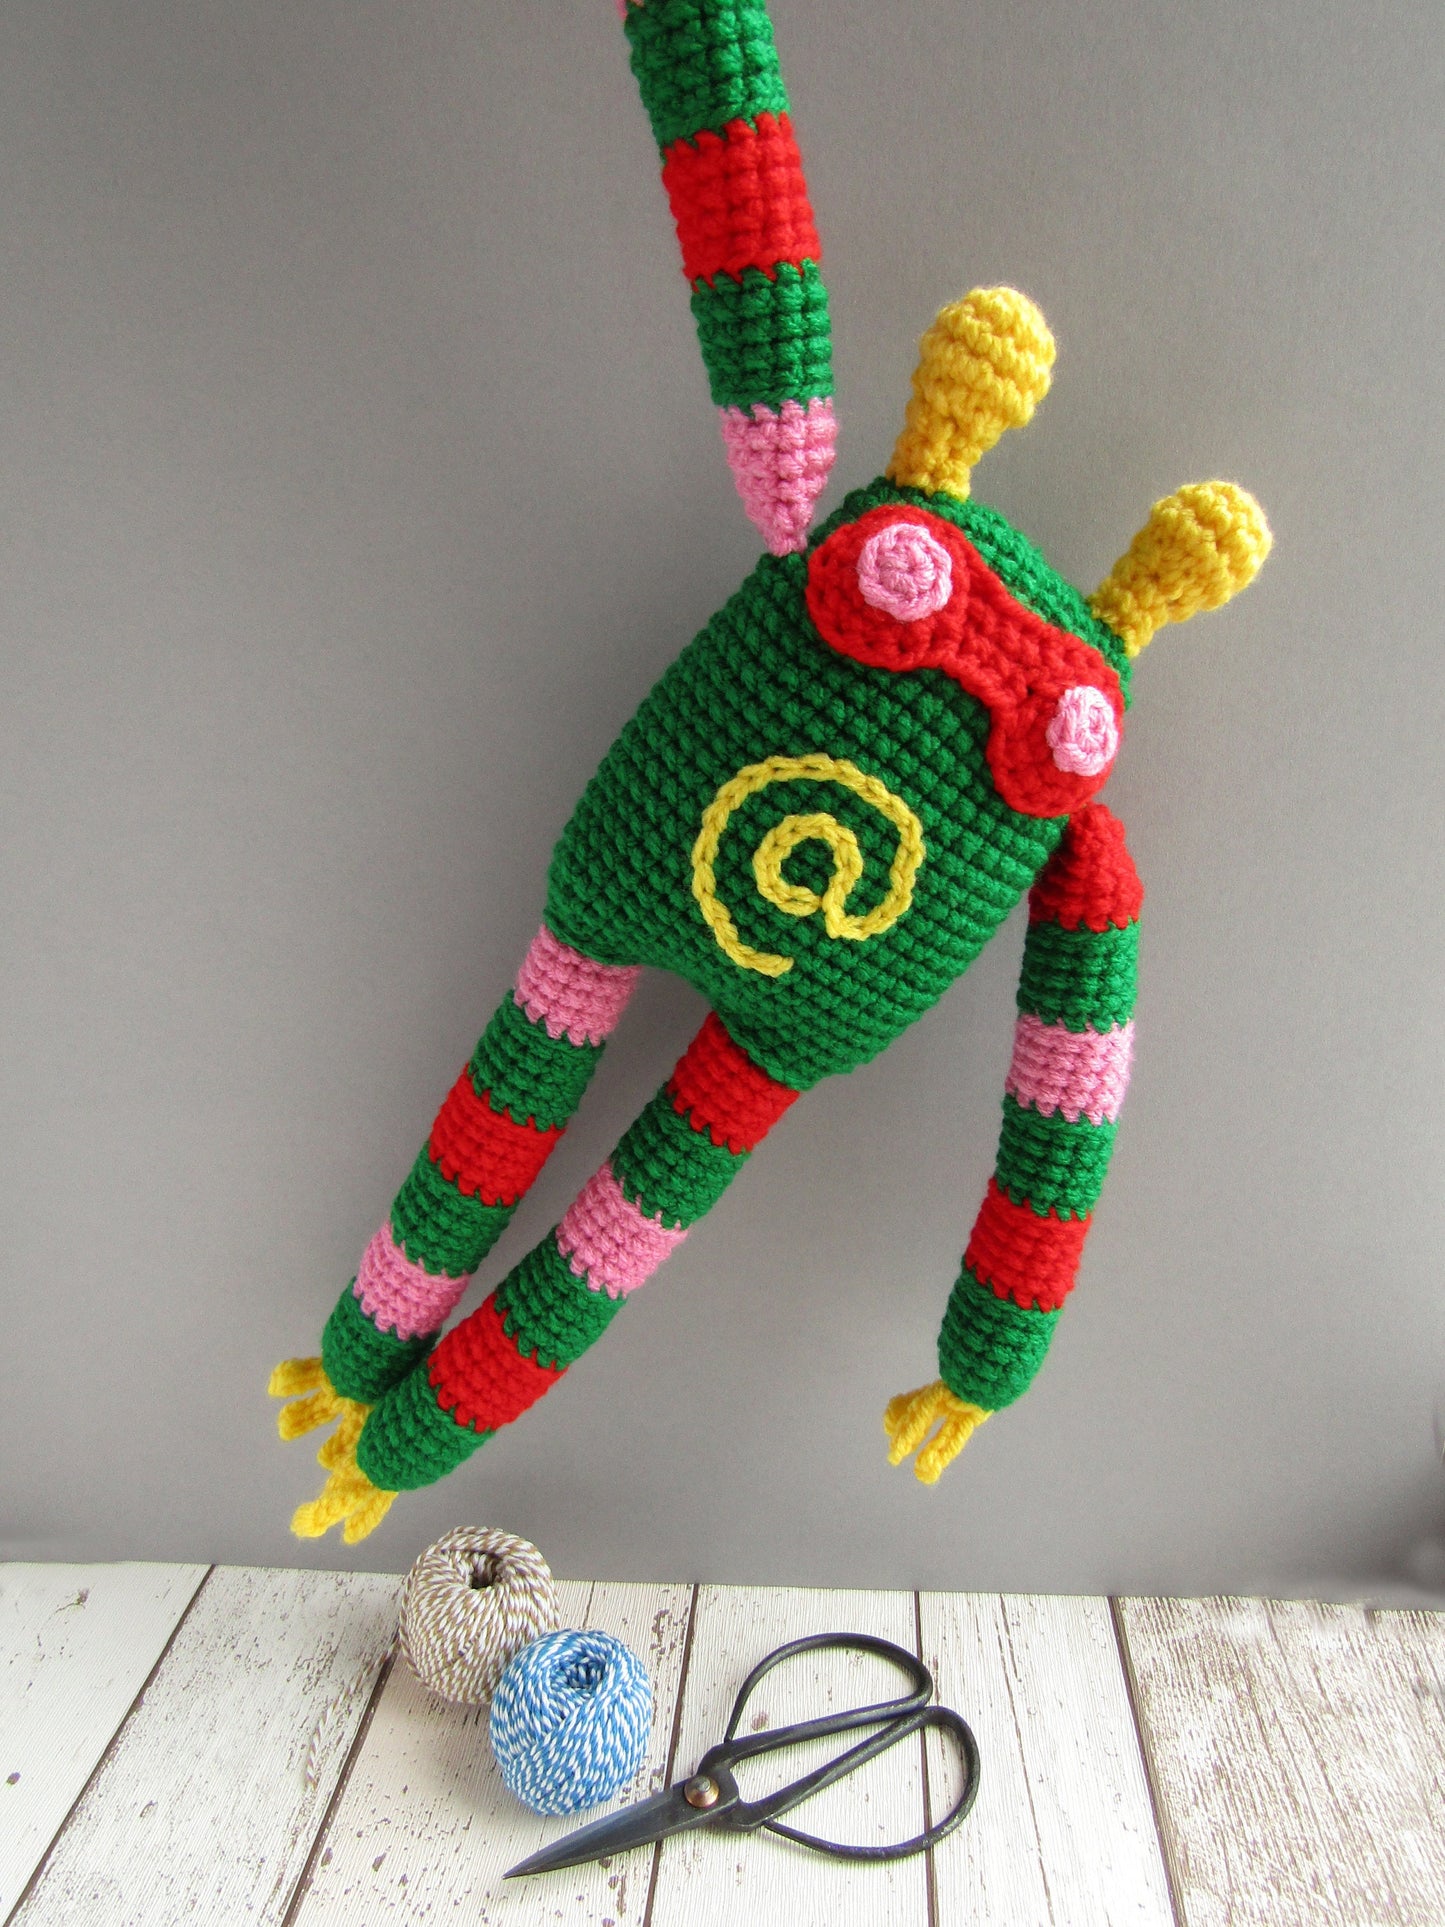 Crochet kit: Amigurumi Monster